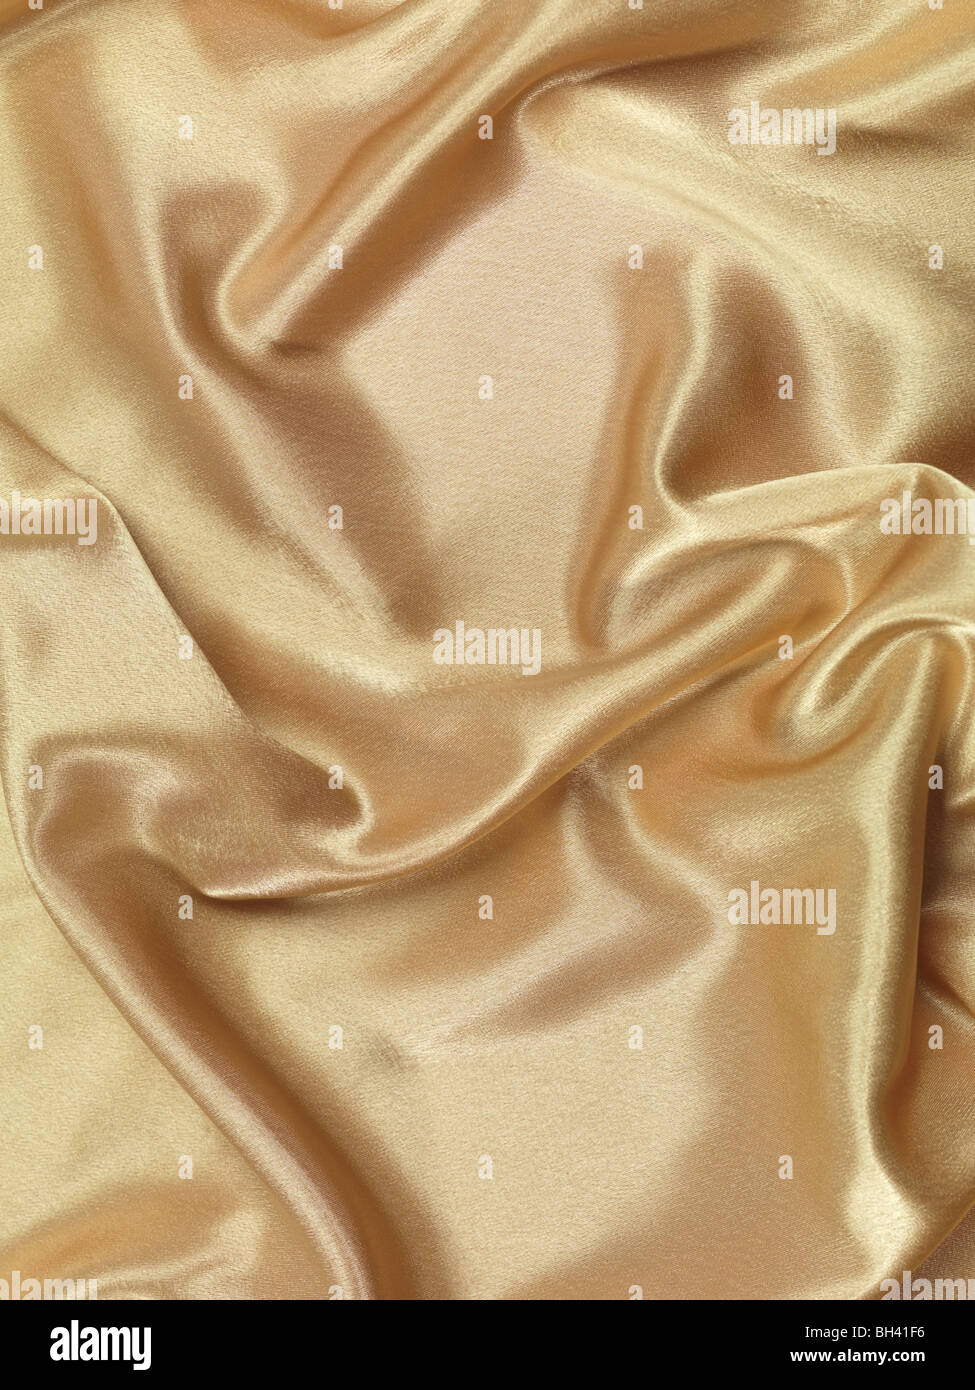 Golden shiny silky fabric background Stock Photo